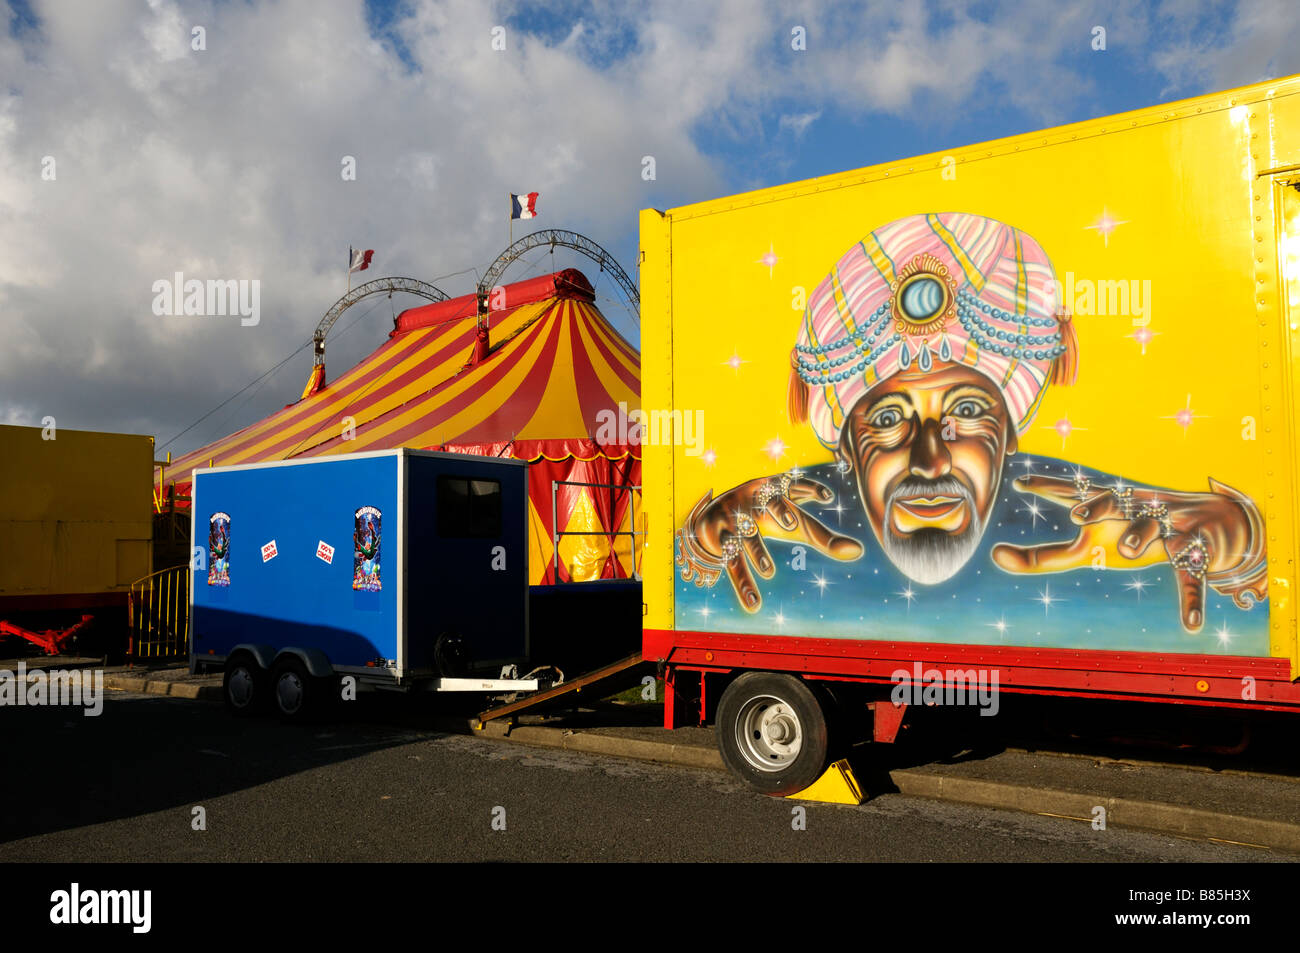 Stock photo of the big top tent of the Zavatta Circus. Stock Photo